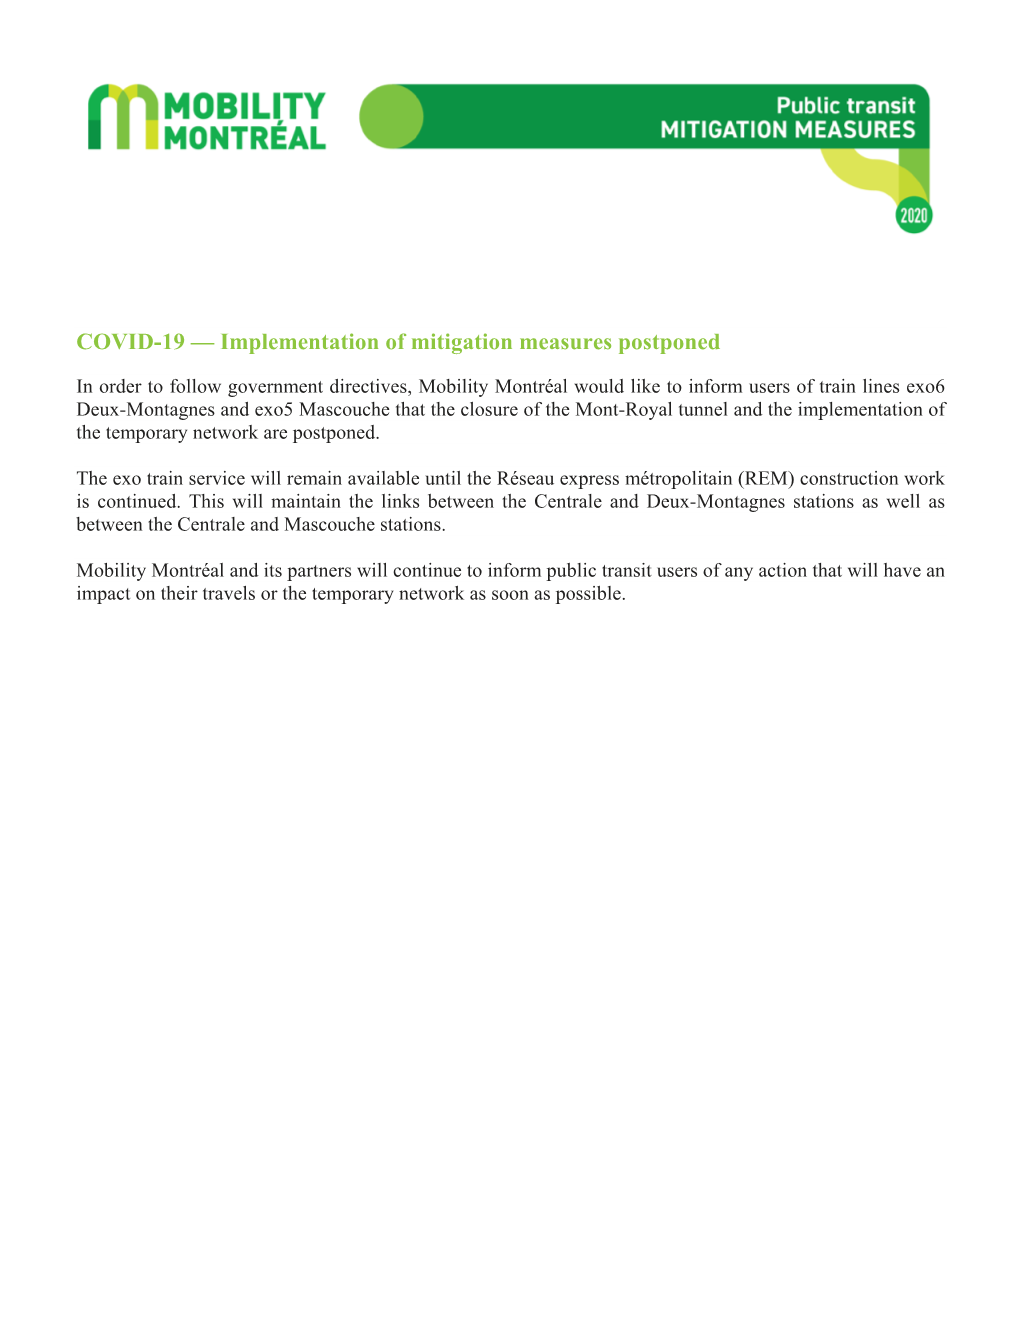 COVID-19 — Implementation of Mitigation Measures Postponed